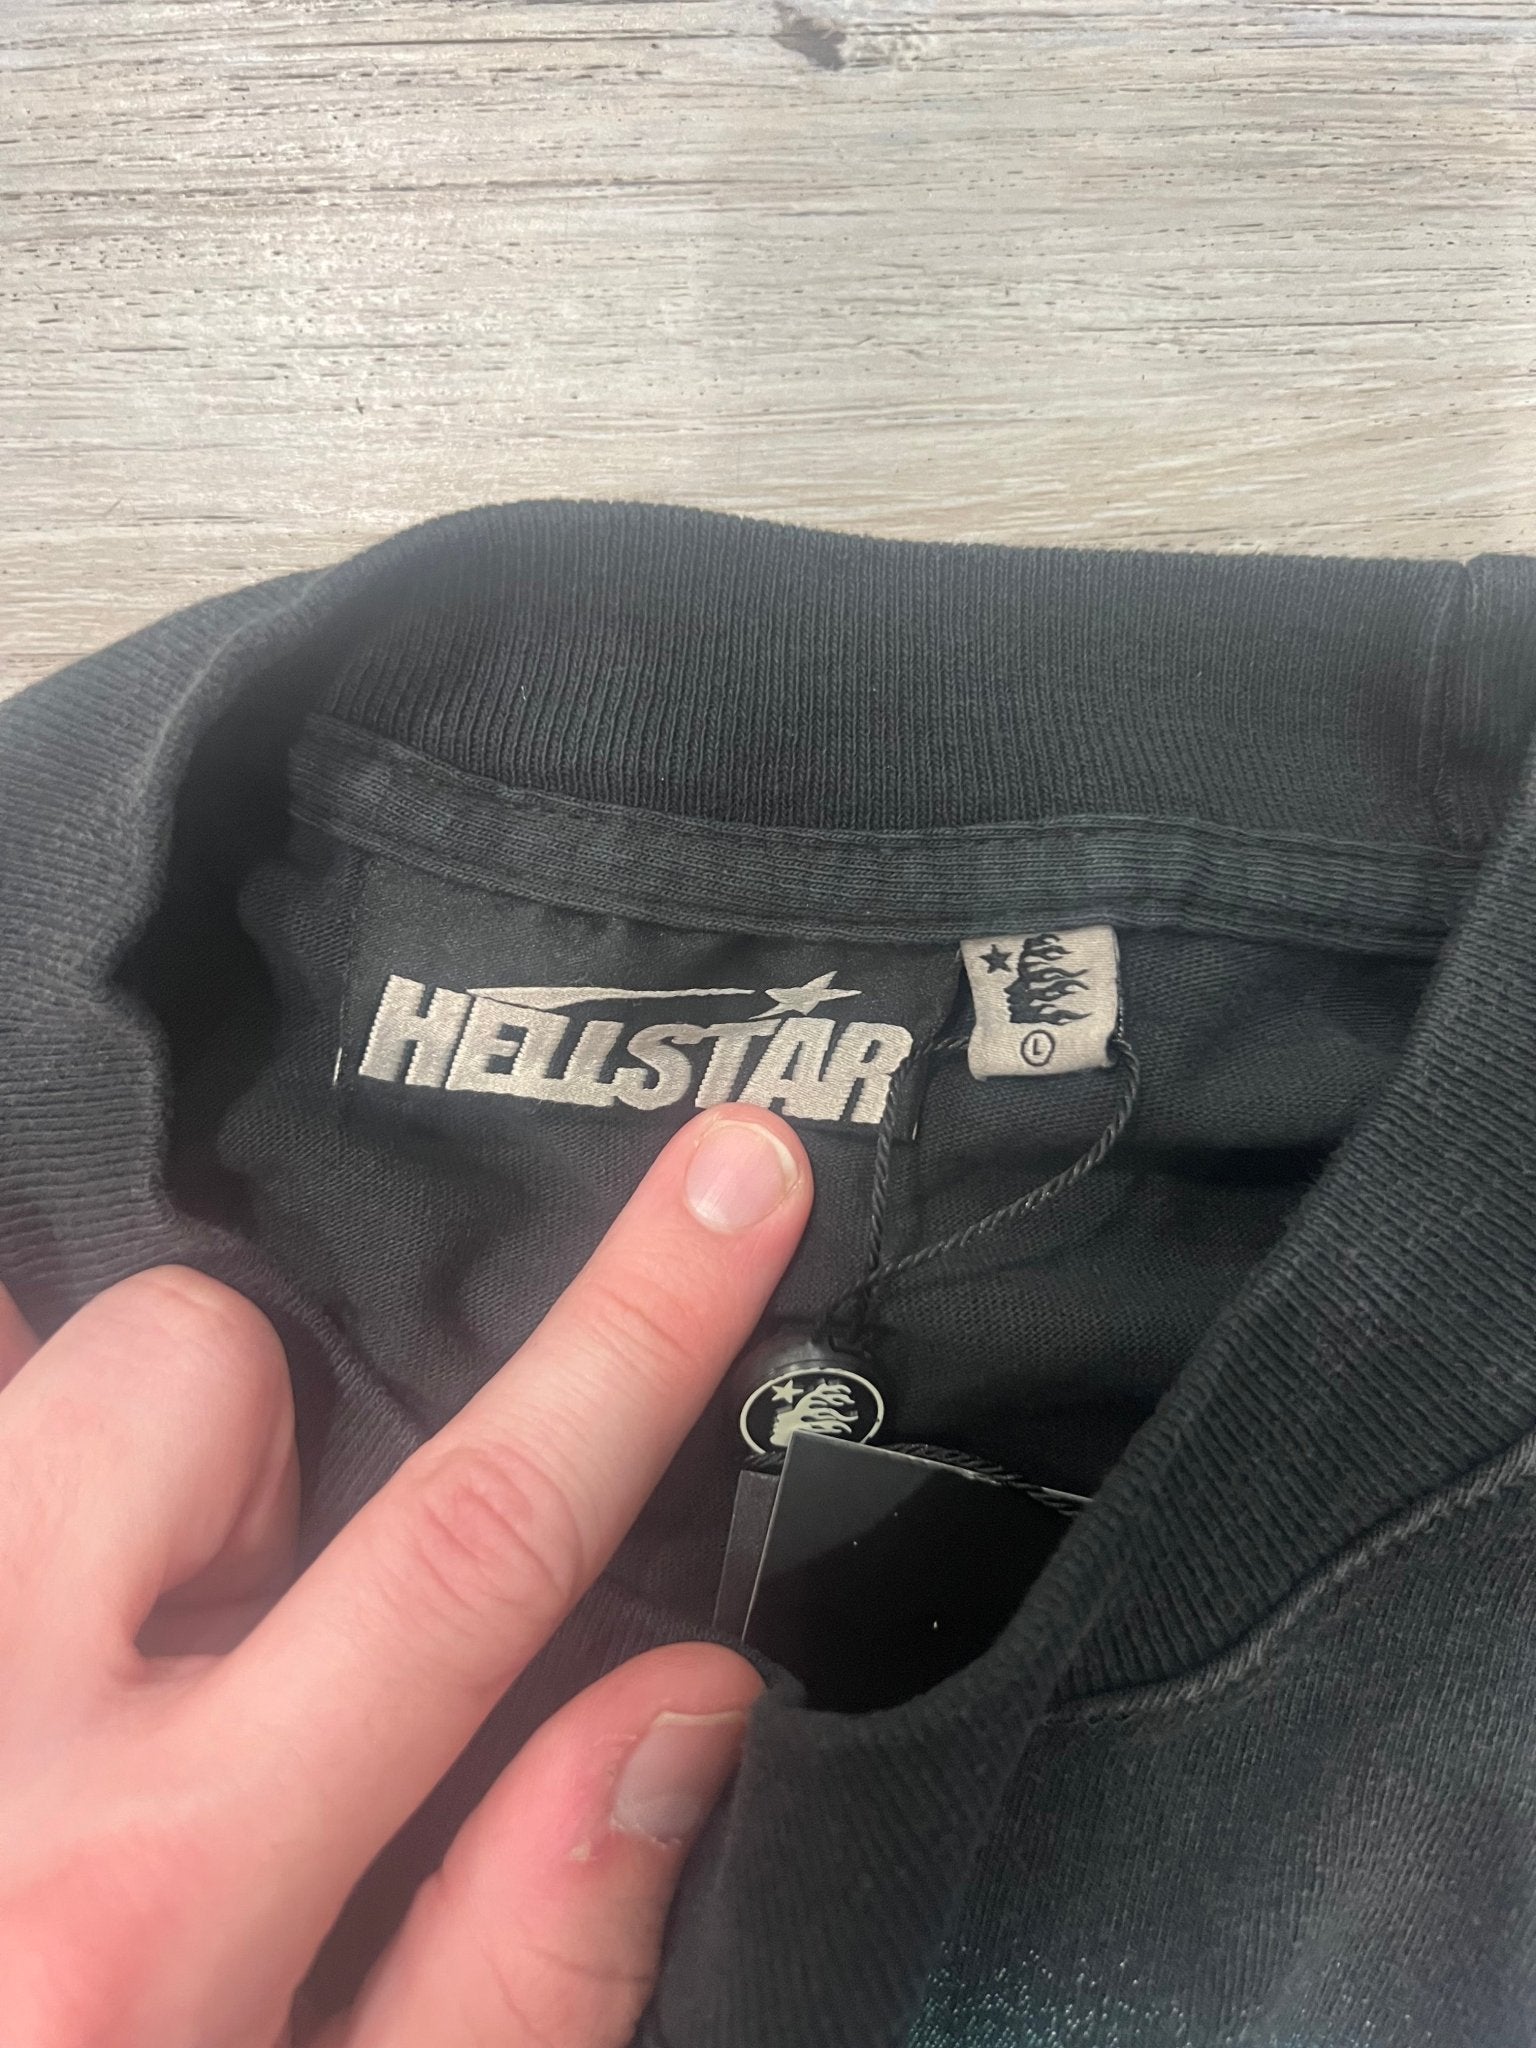 Hellstar The Future T-Shirt - Supra amp Sneakers